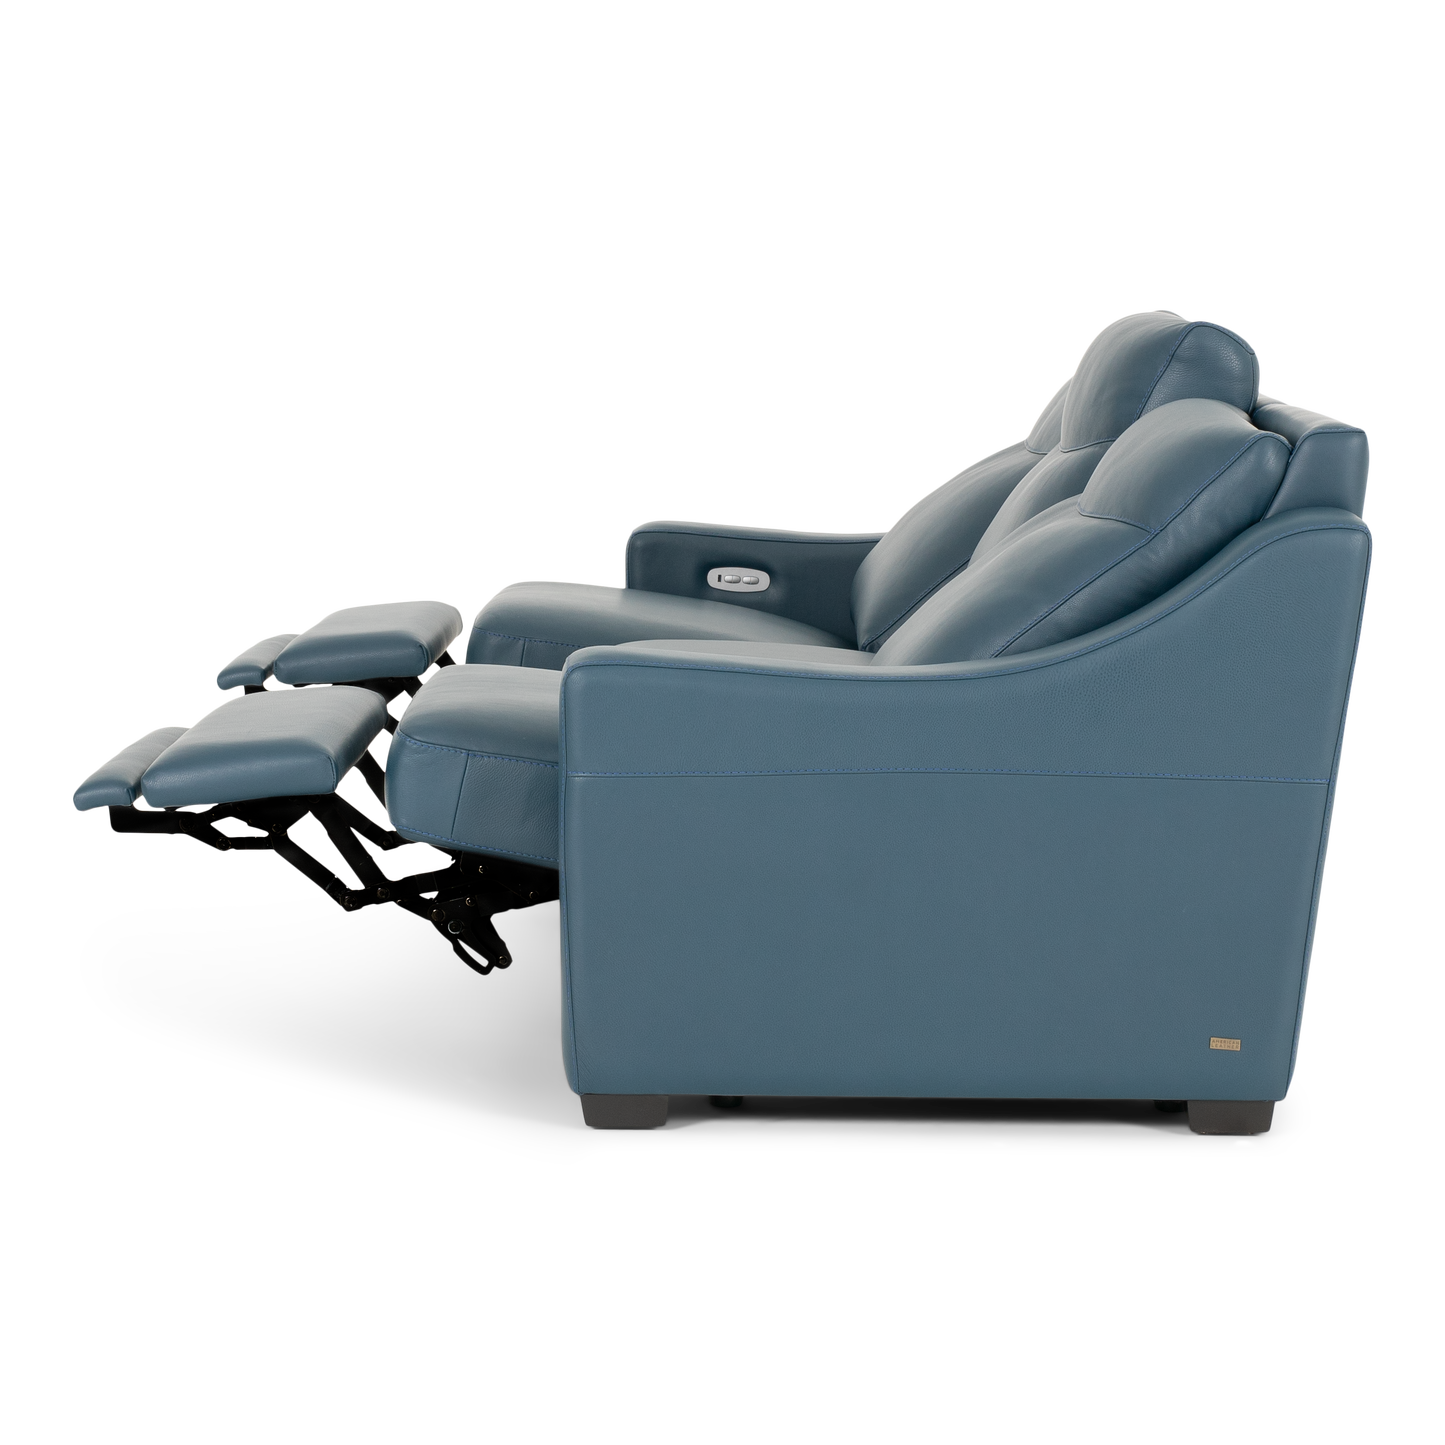 Sarasota Power Motion Sofa - Stickley Furniture | Mattress